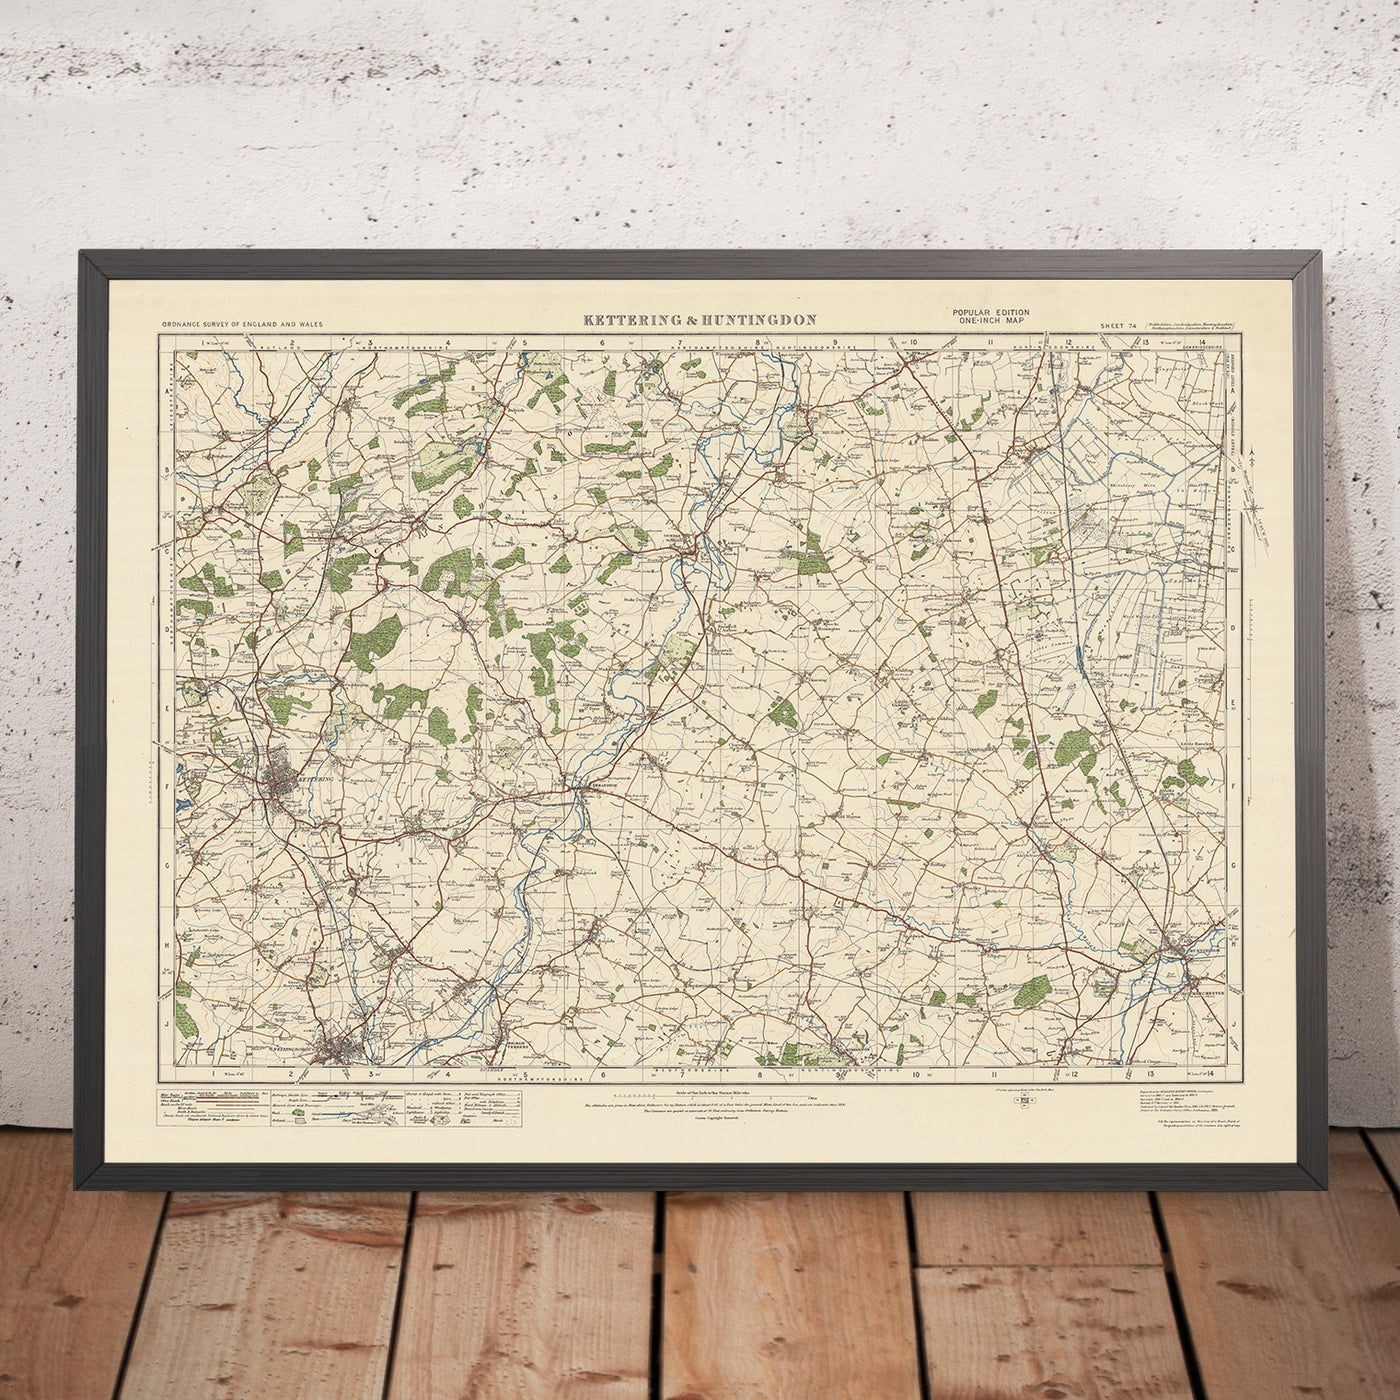 Old Ordnance Survey Map, Sheet 74 - Kettering & Huntingdon, 1925: Corby, Oundle, Wellingborough, Huntingdon, Yaxley